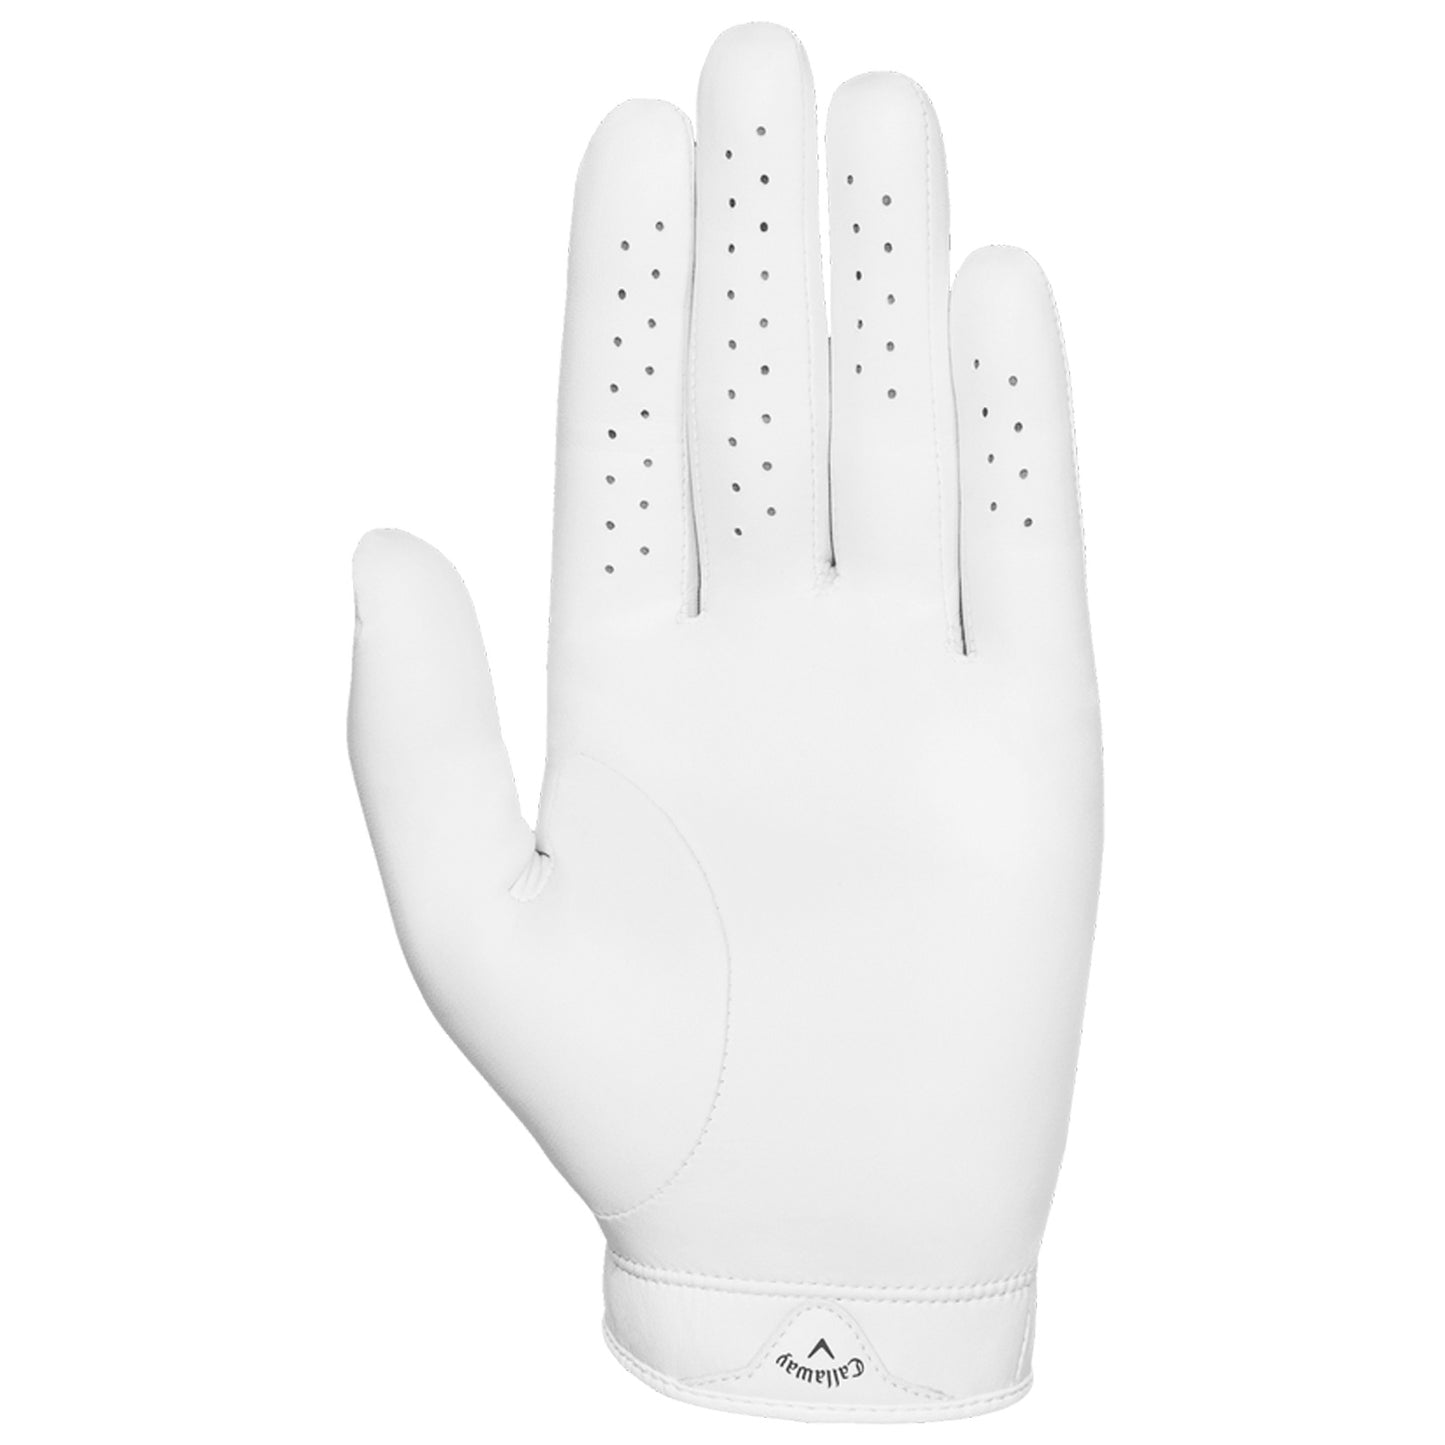 Callaway Mens Tour Authentic Left Hand Golf Glove